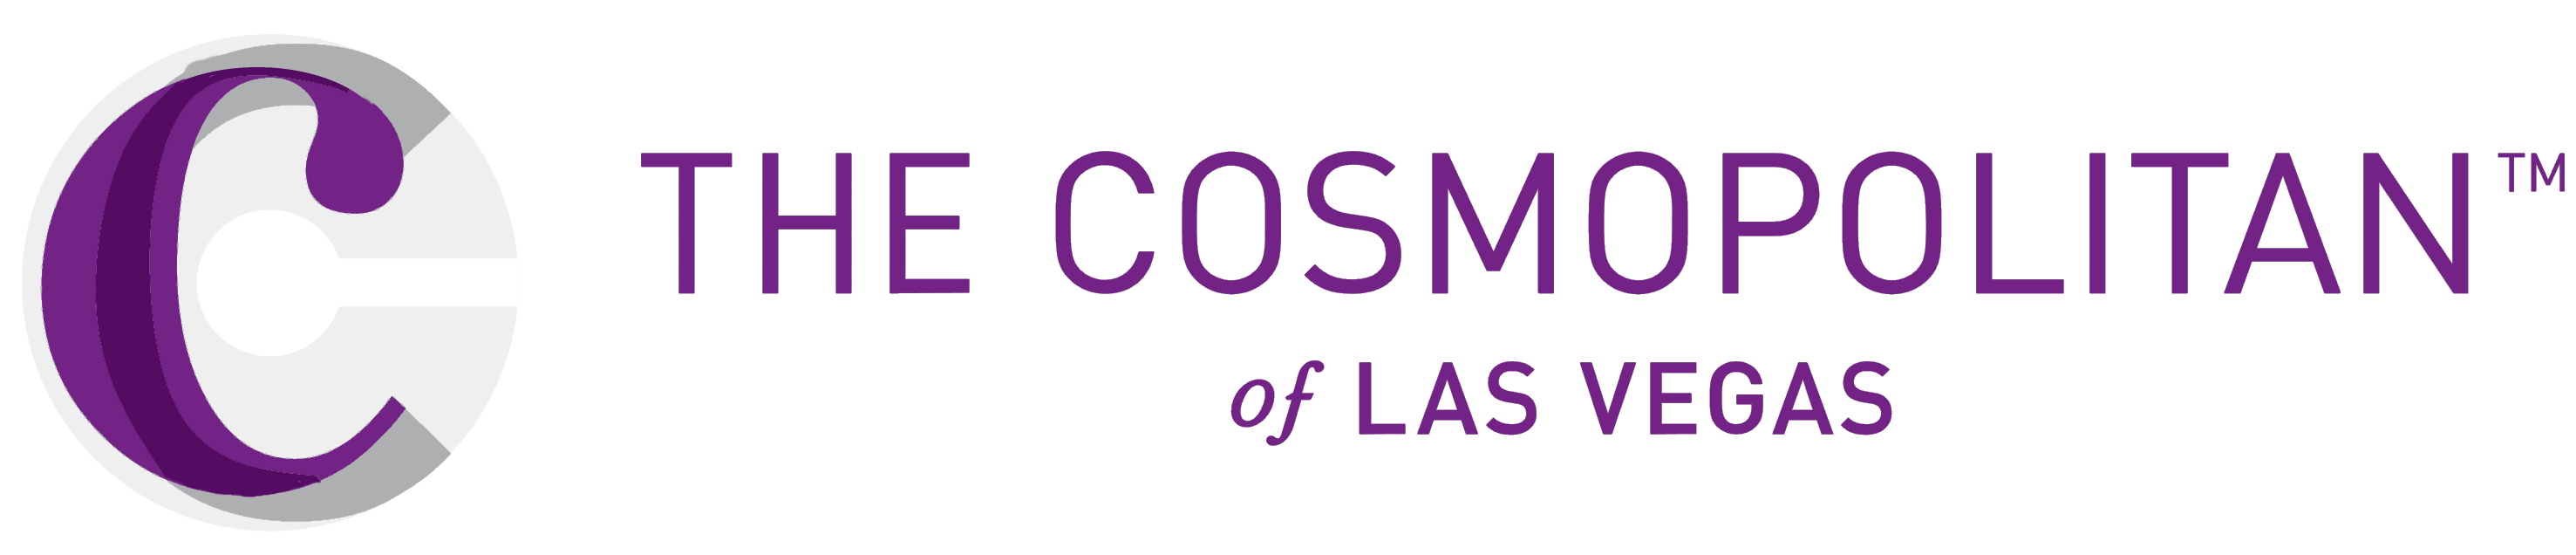 Cosmopolitan Las Vegas logo, logotype